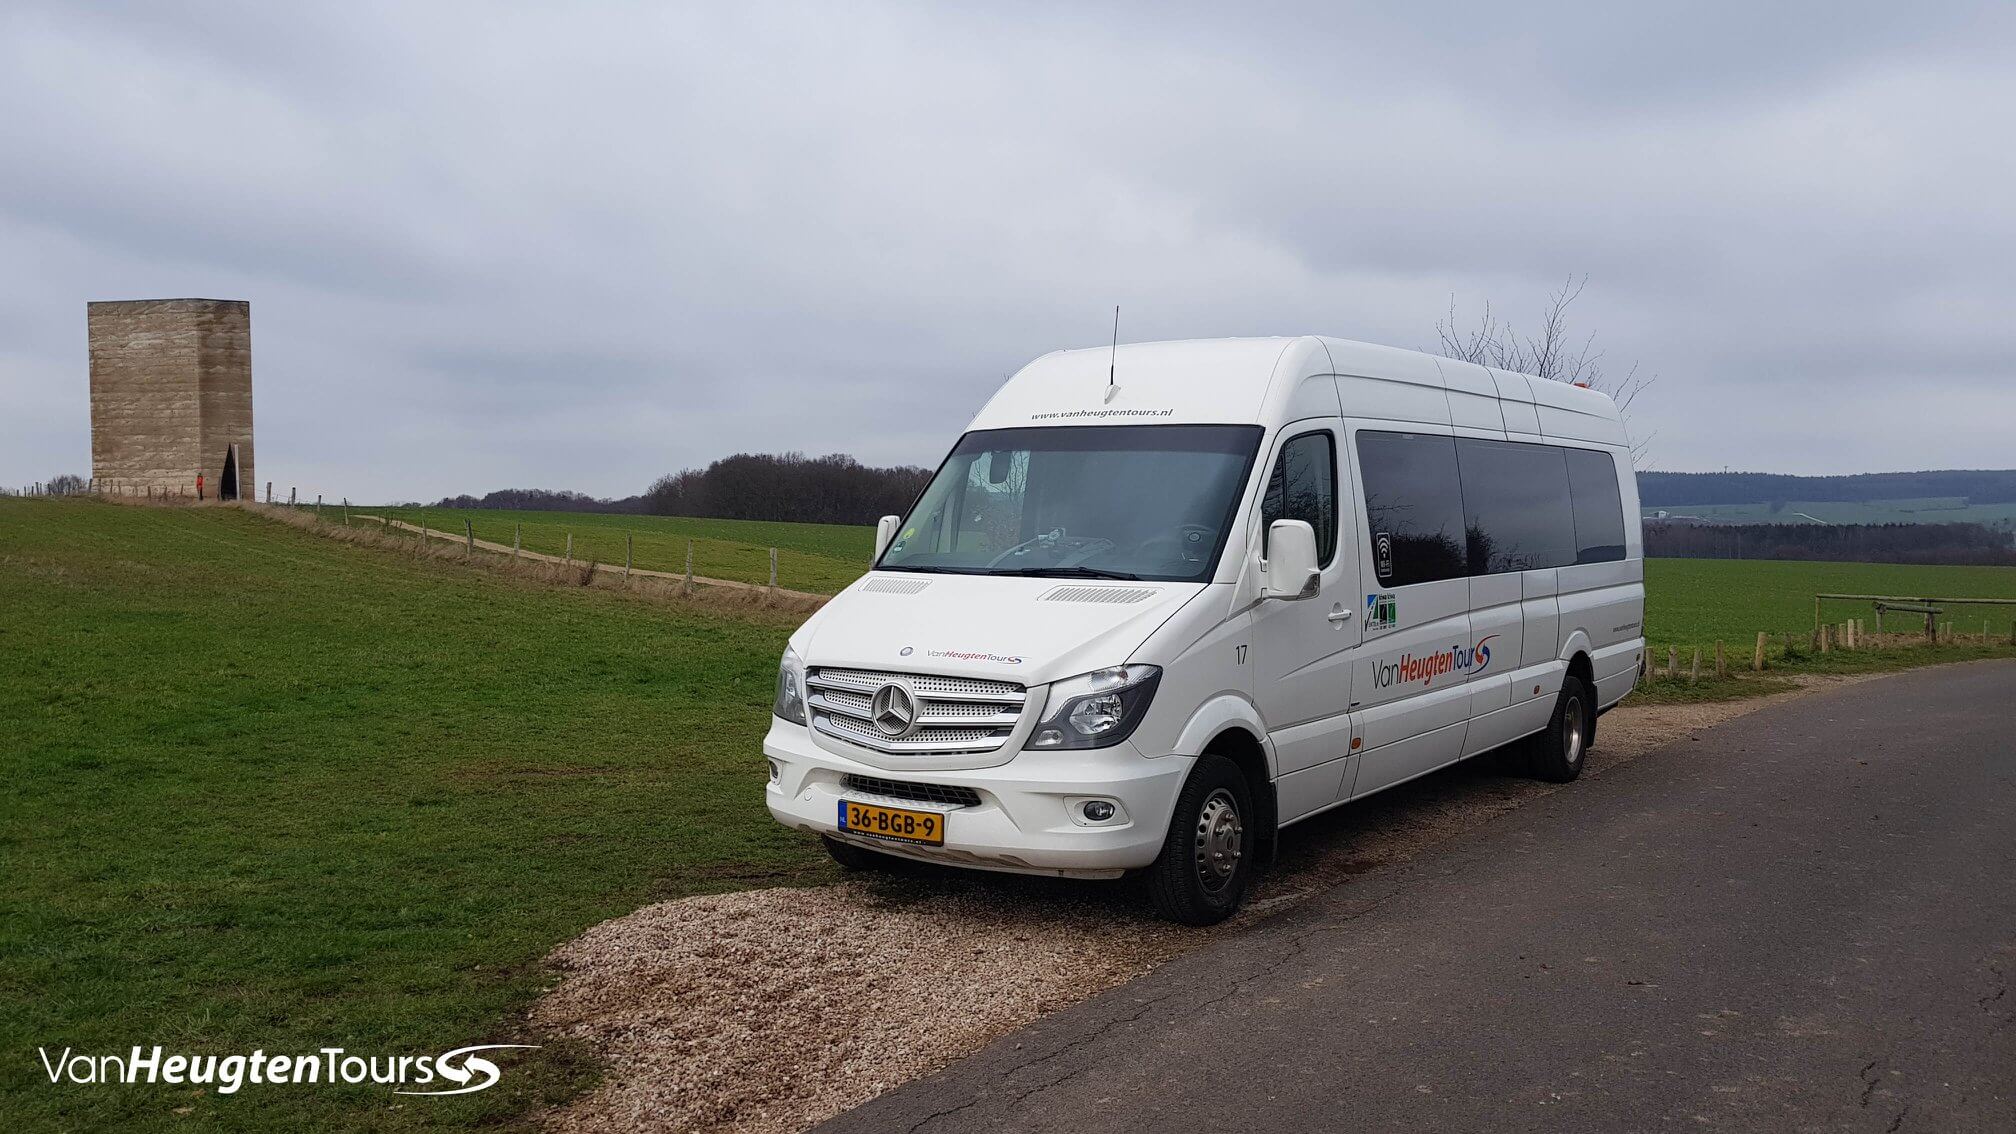 Alquila un 16 asiento Minibús (Mercedes Benz Sprinter Limousine 2018) de Van Heugten Tours en NOOTDORP 